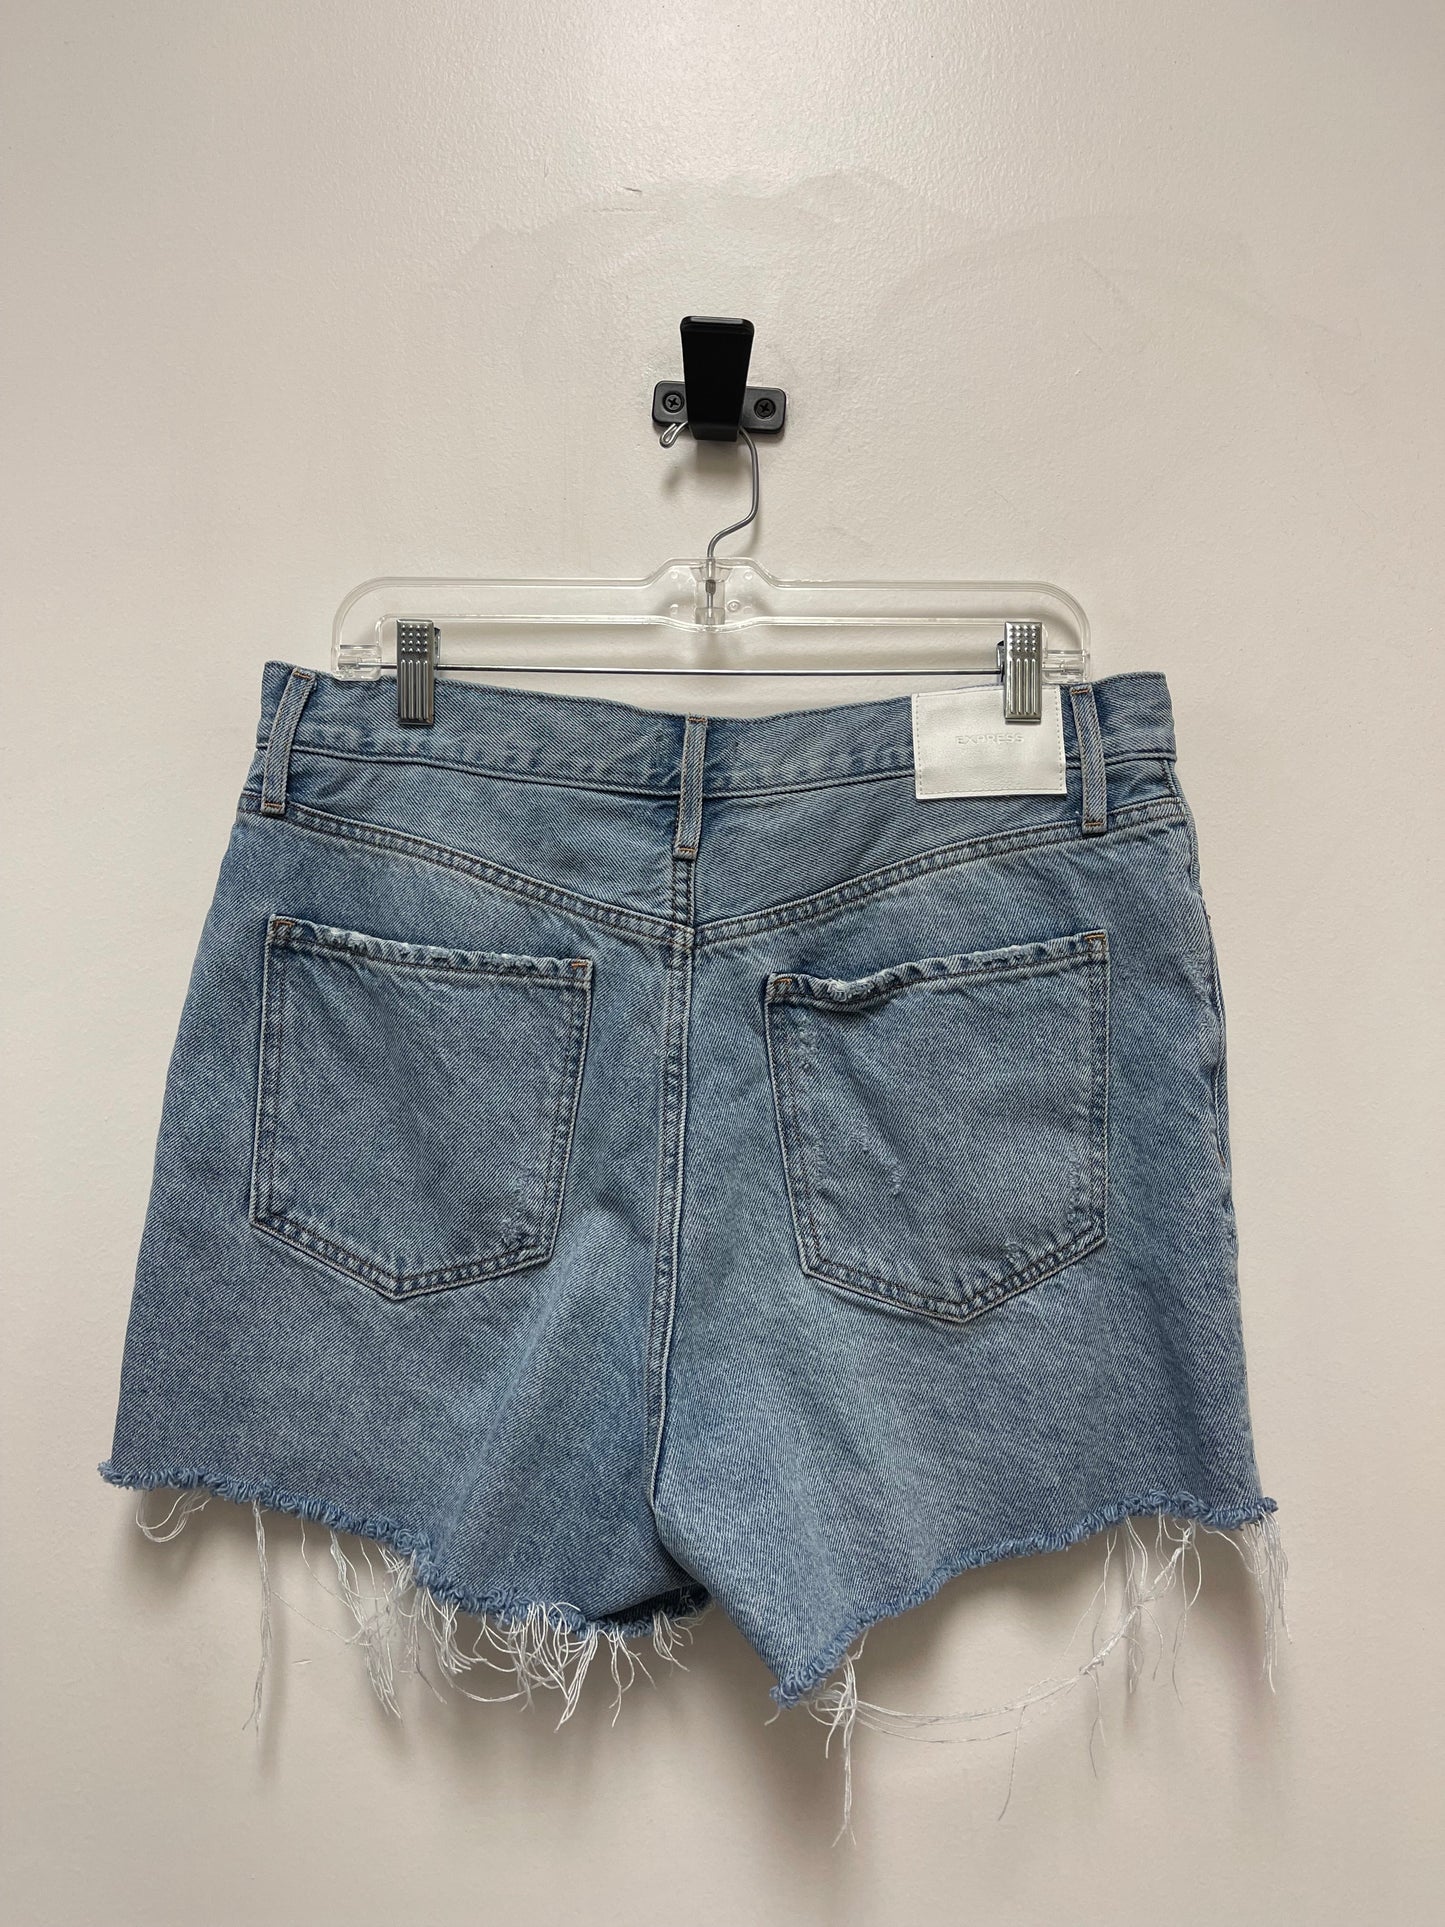 Blue Denim Shorts Express, Size 14